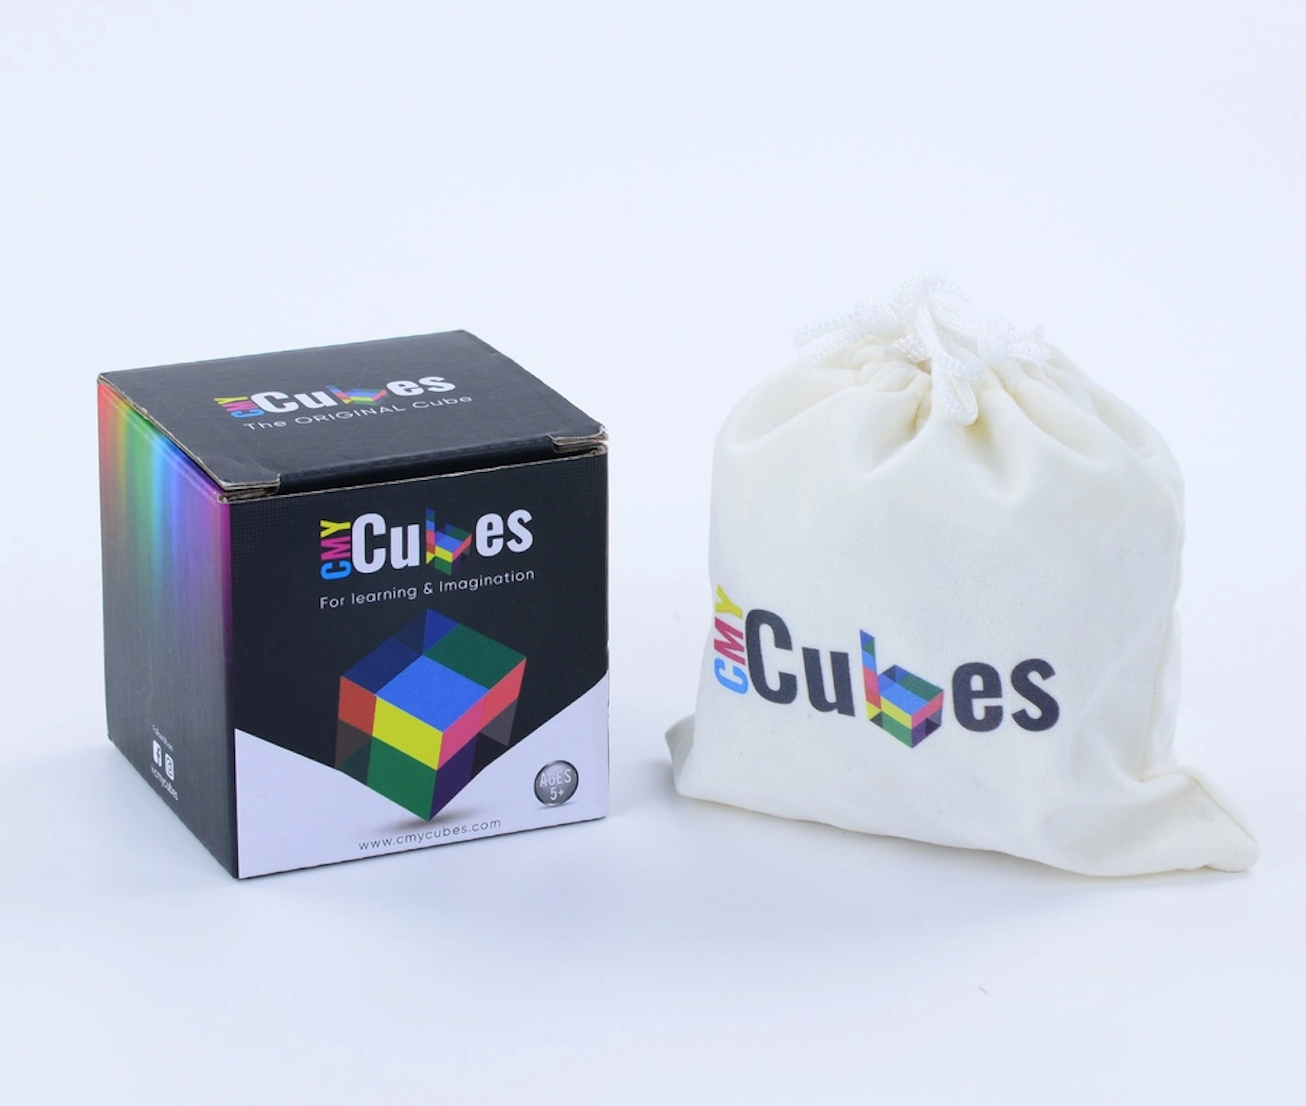 CMY Cube: The Original Mini Cube